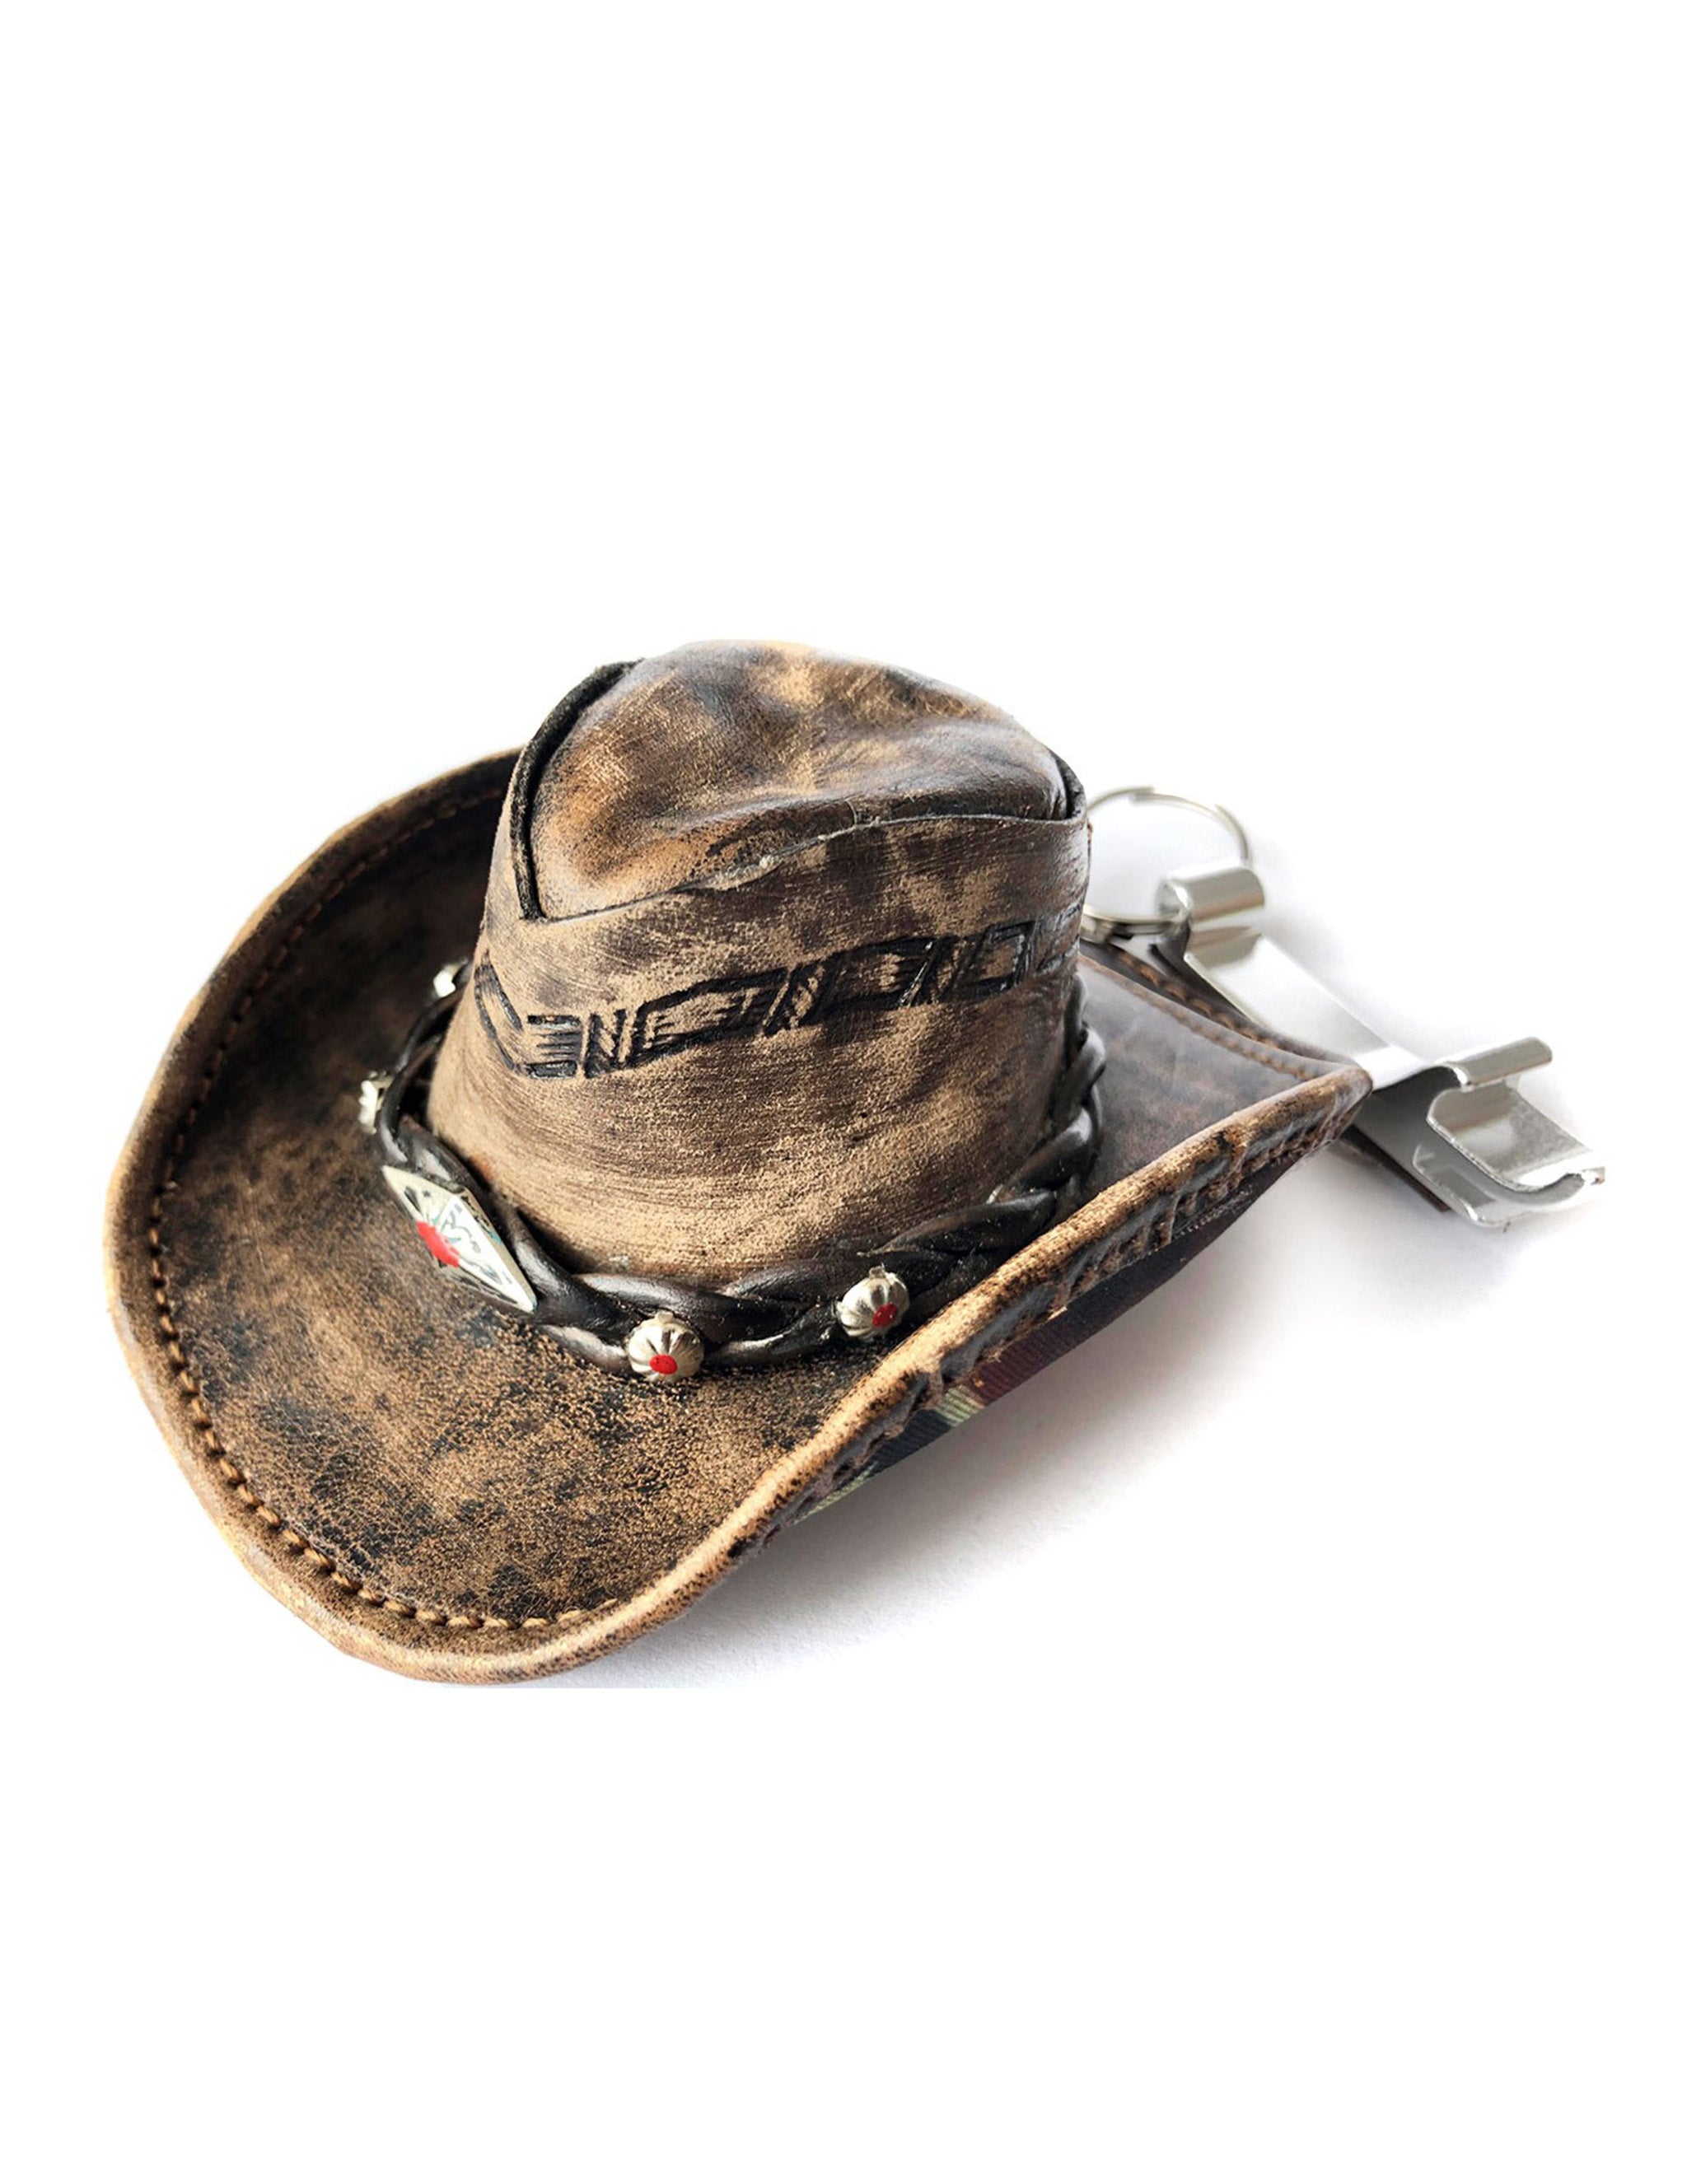 Nashville Cowboy Hat Key Chain